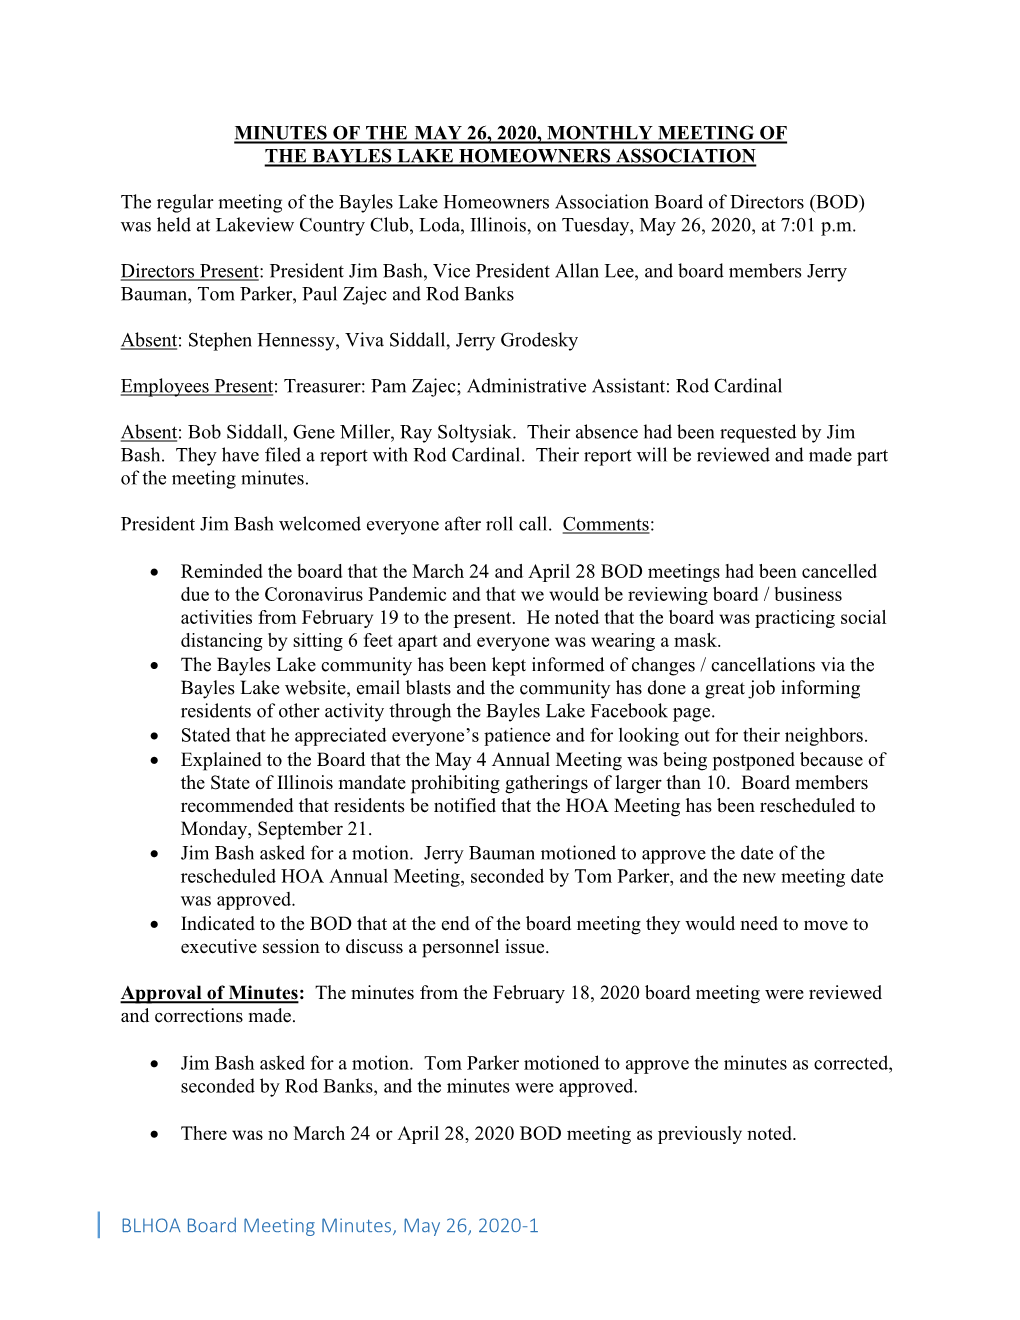 BLHOA Board Meeting Minutes, May 26, 2020-1